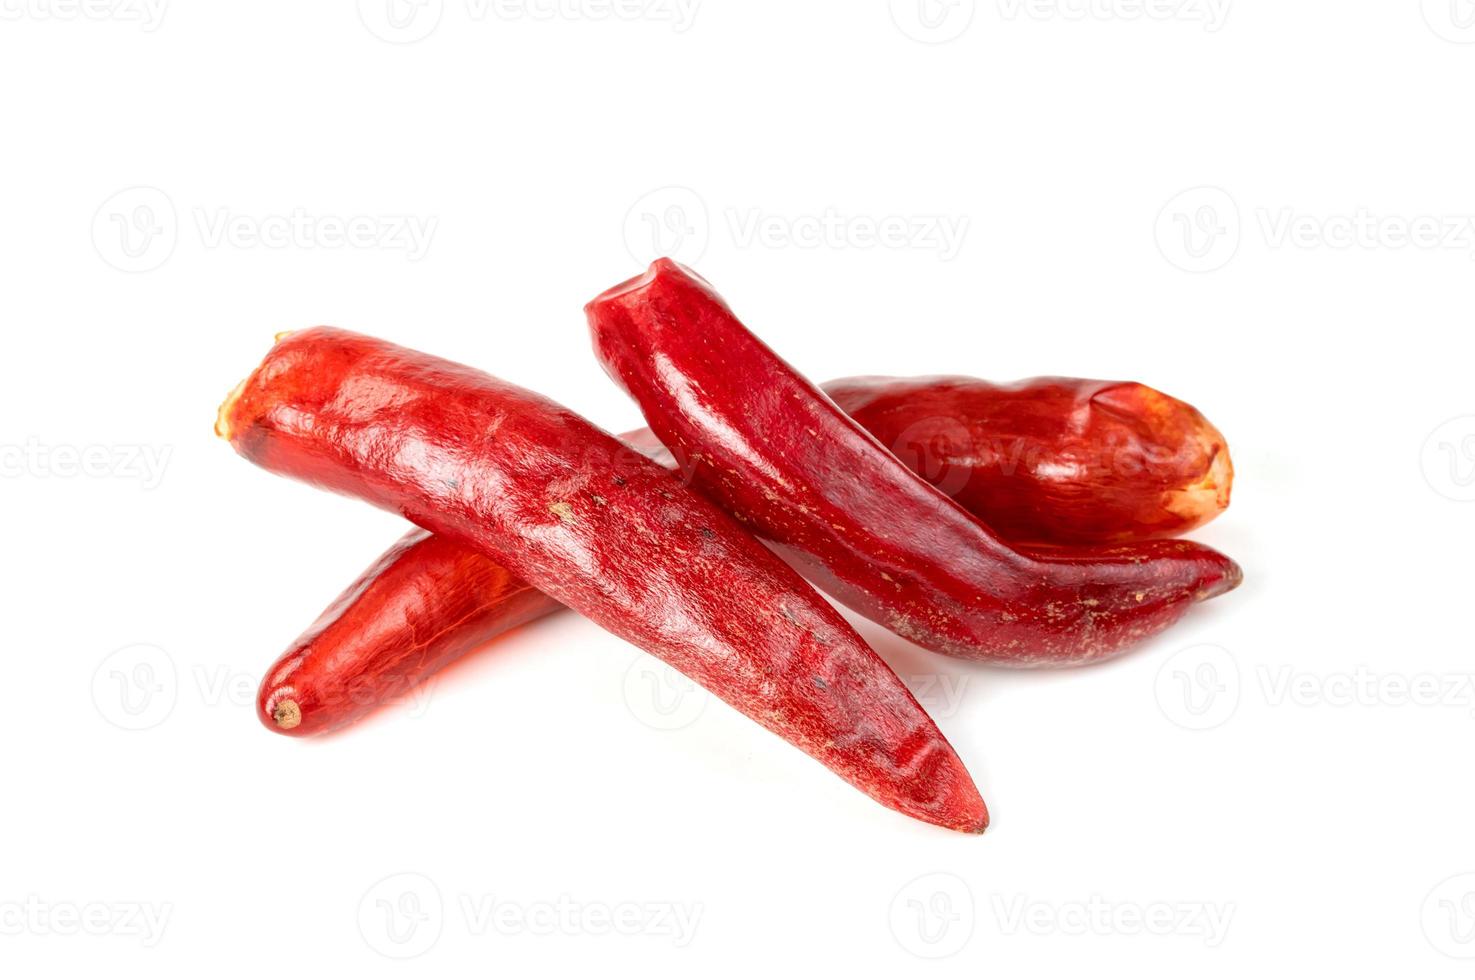 röd mald paprika eller torr chilipeppar isolerad på vit bakgrund foto